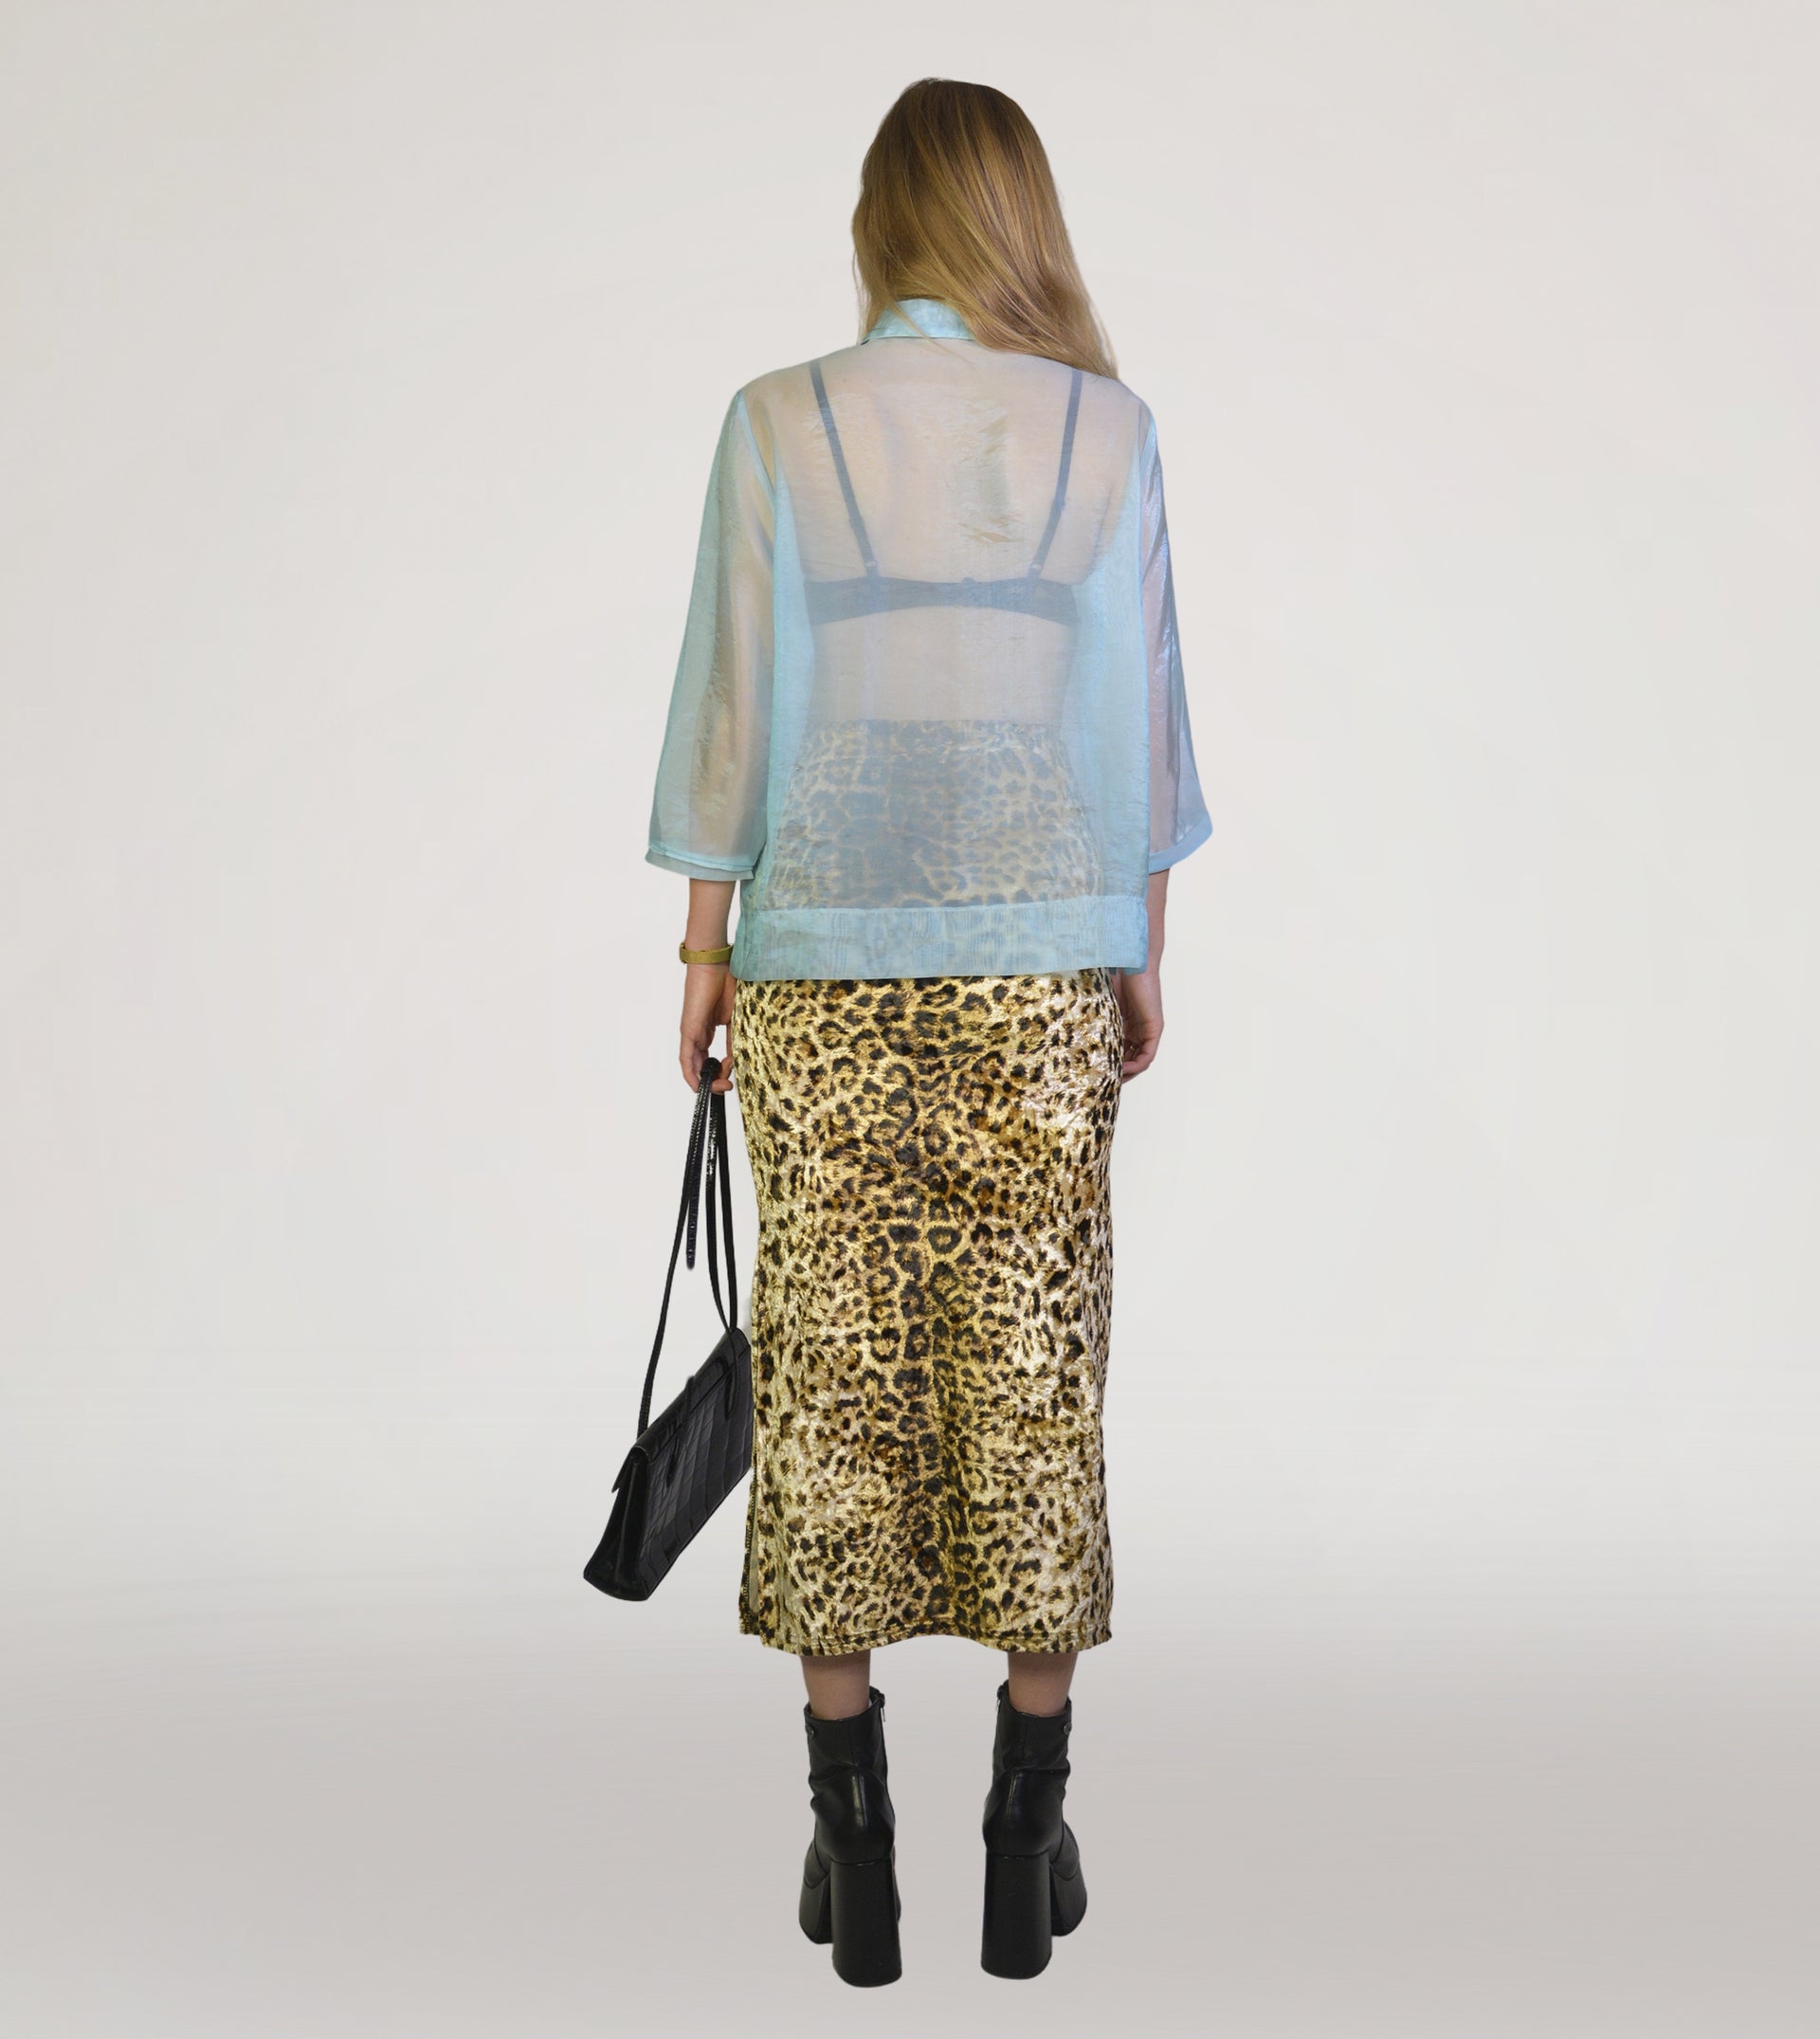 Transparent blouse - PICKNWEIGHT - VINTAGE KILO STORE